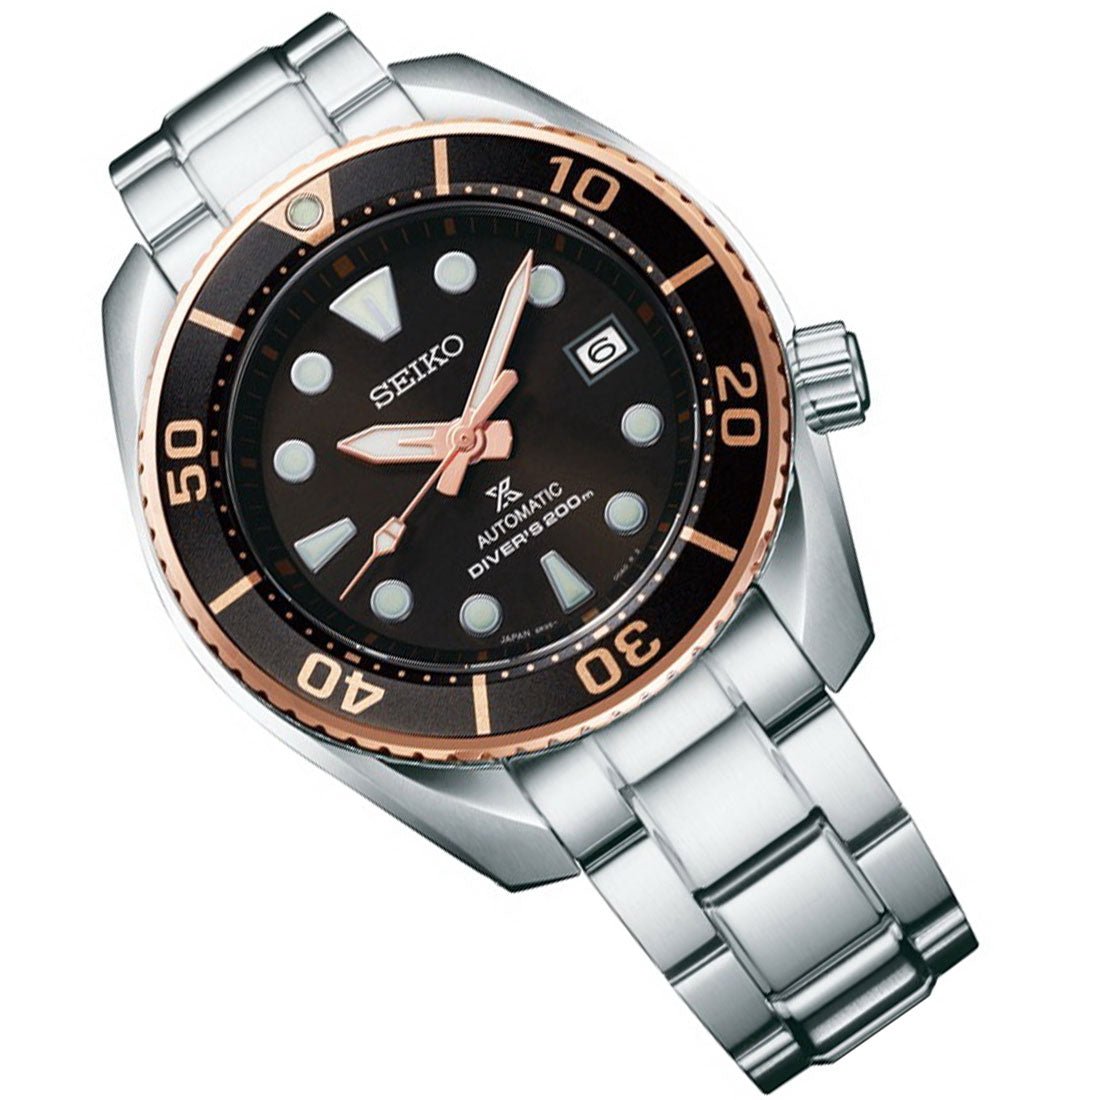 Seiko Prospex GINZA 2020 Limited Edition JDM Watch SBDC114 -Seiko